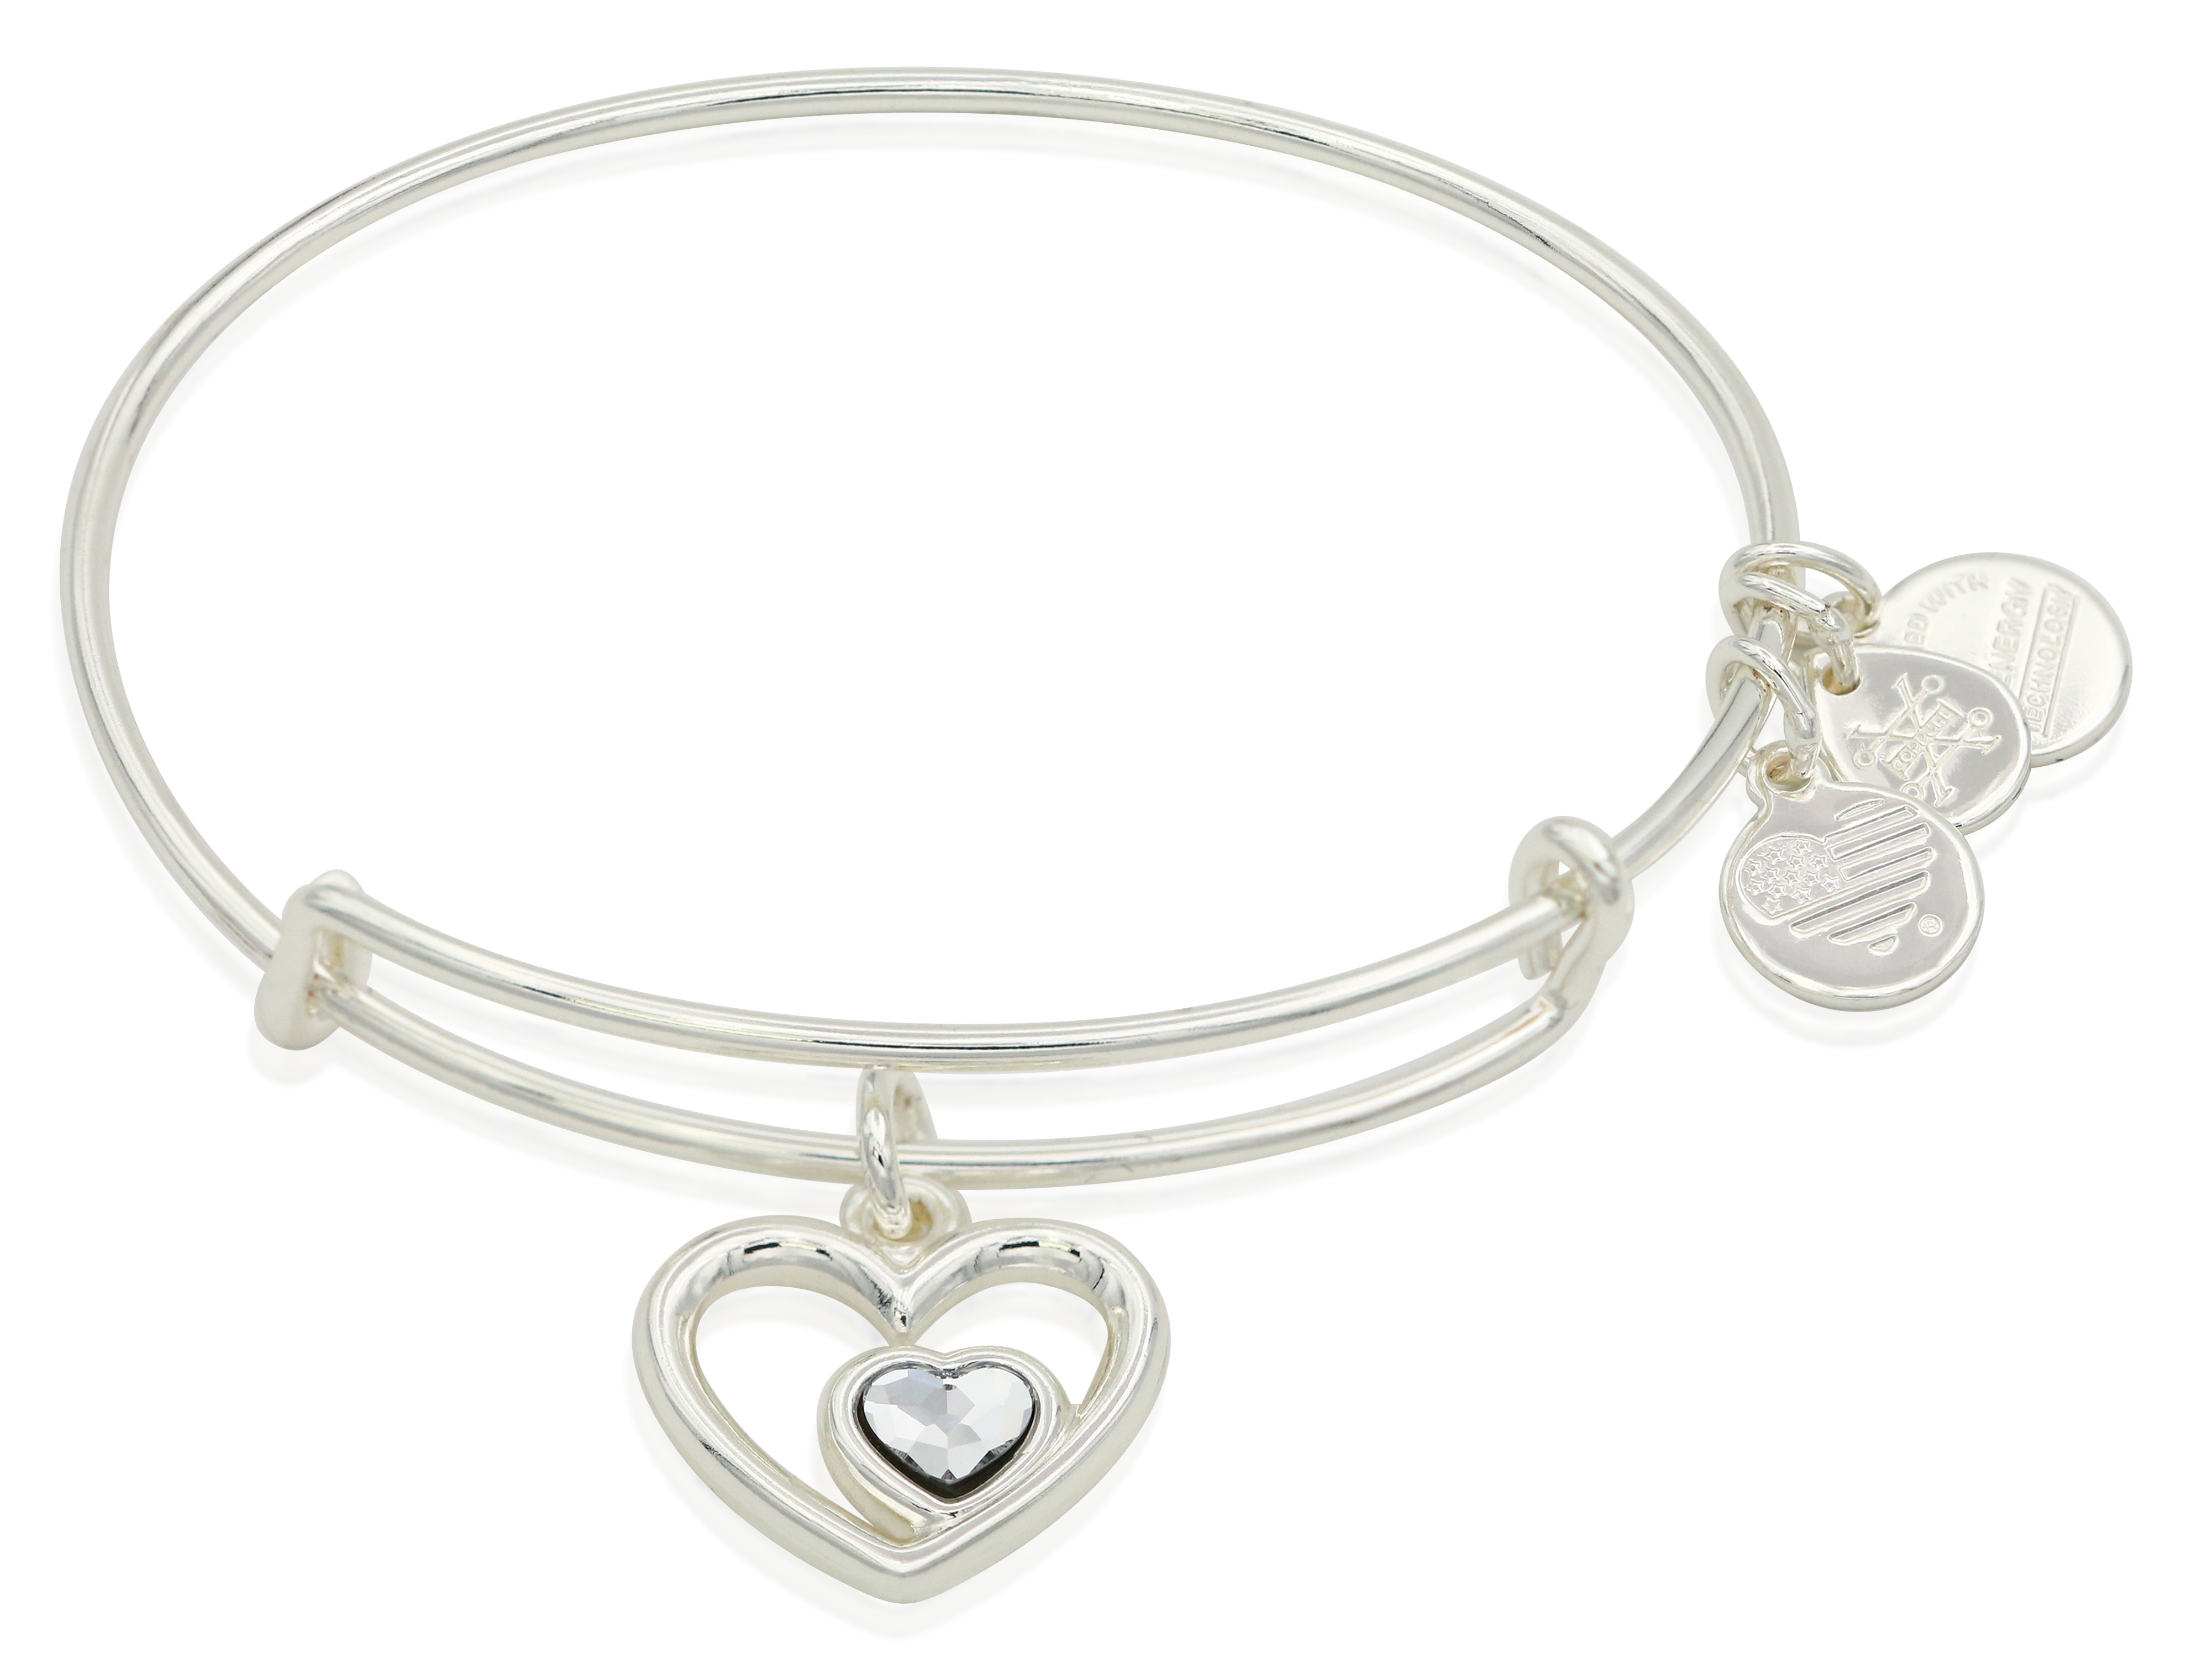 Alex and Ani Heart in Heart Charm Bangle Bracelet - Shiny Silver Finish ...